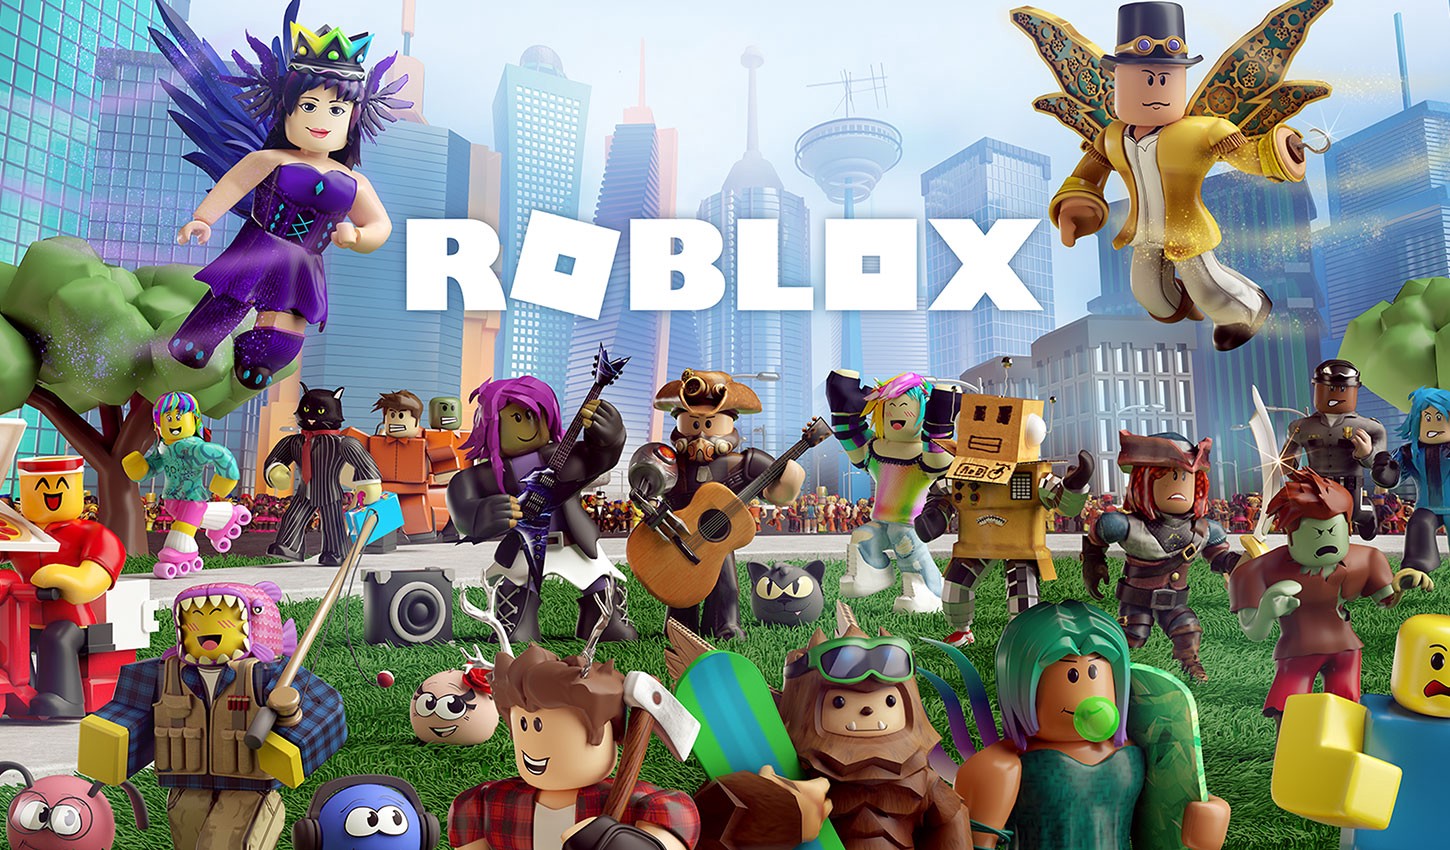 Roblox Online 3D Game Design & Programming for Beginners - STEAM